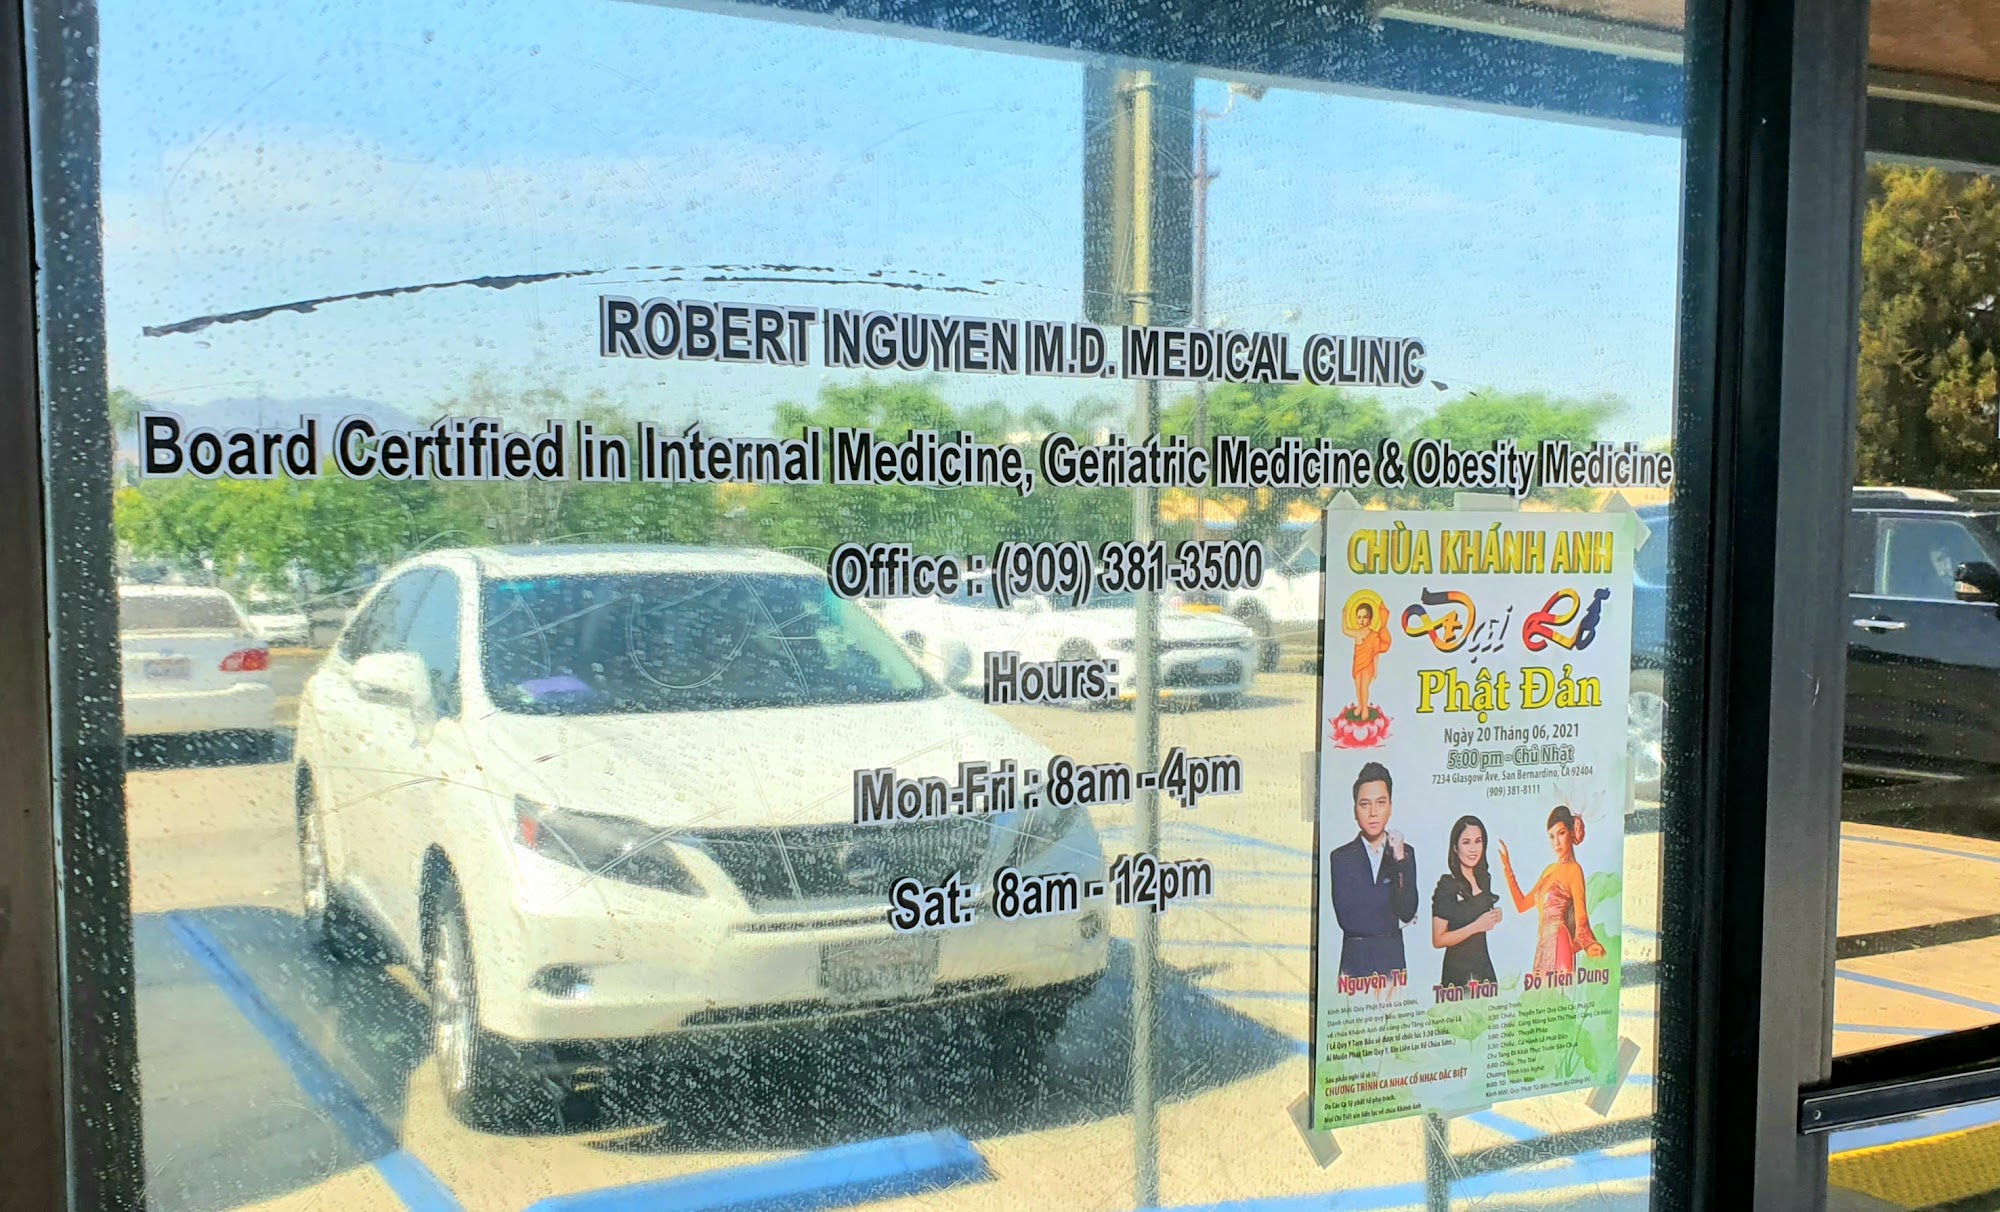 Robert Nguyen MD, Medical Clinic